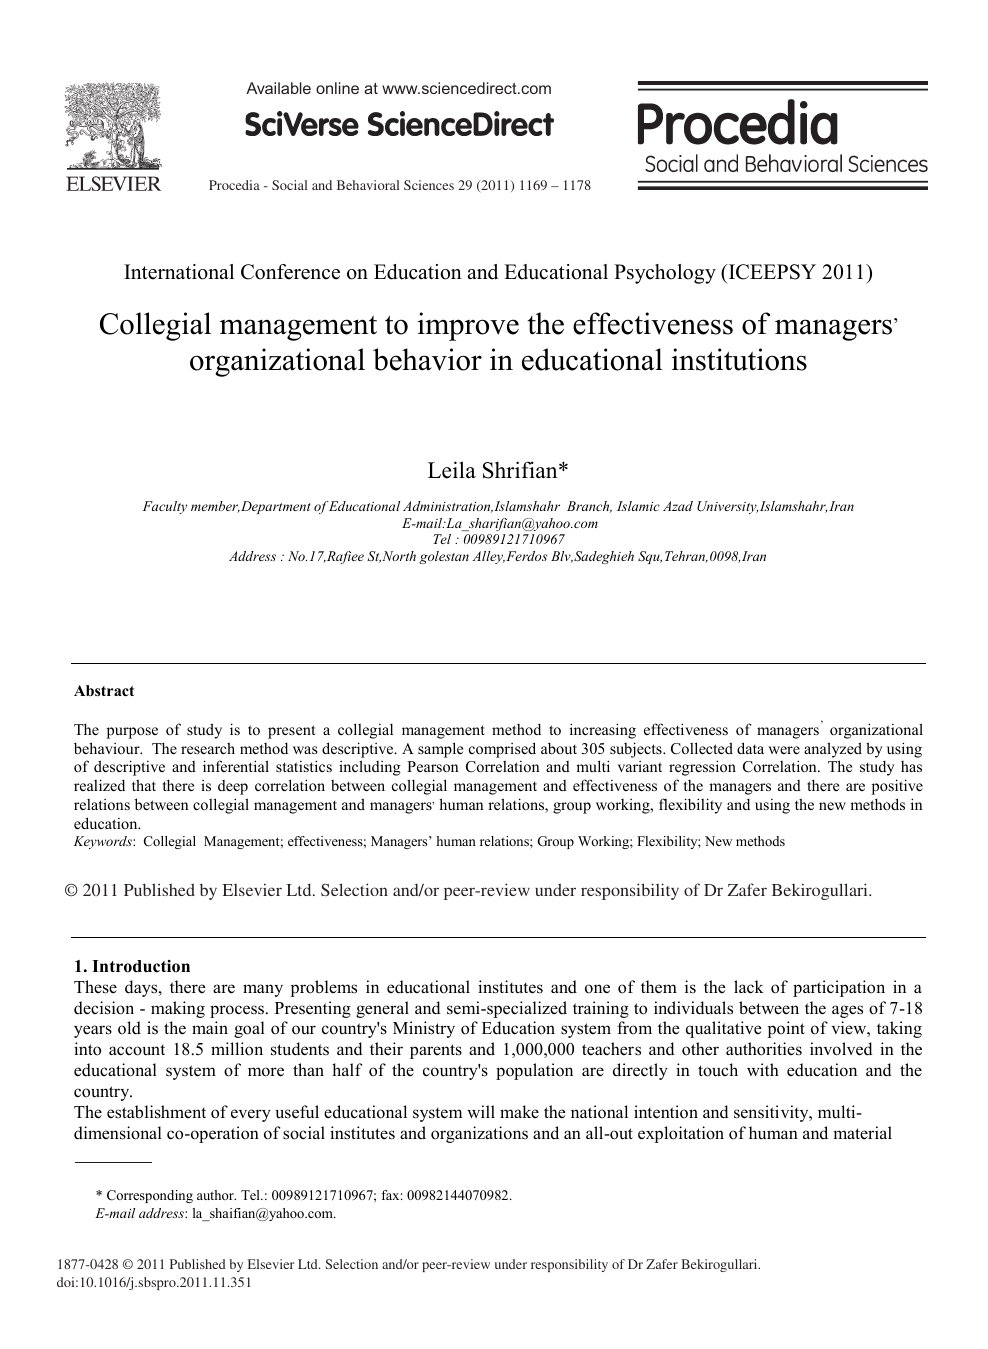 research paper organizational behavior